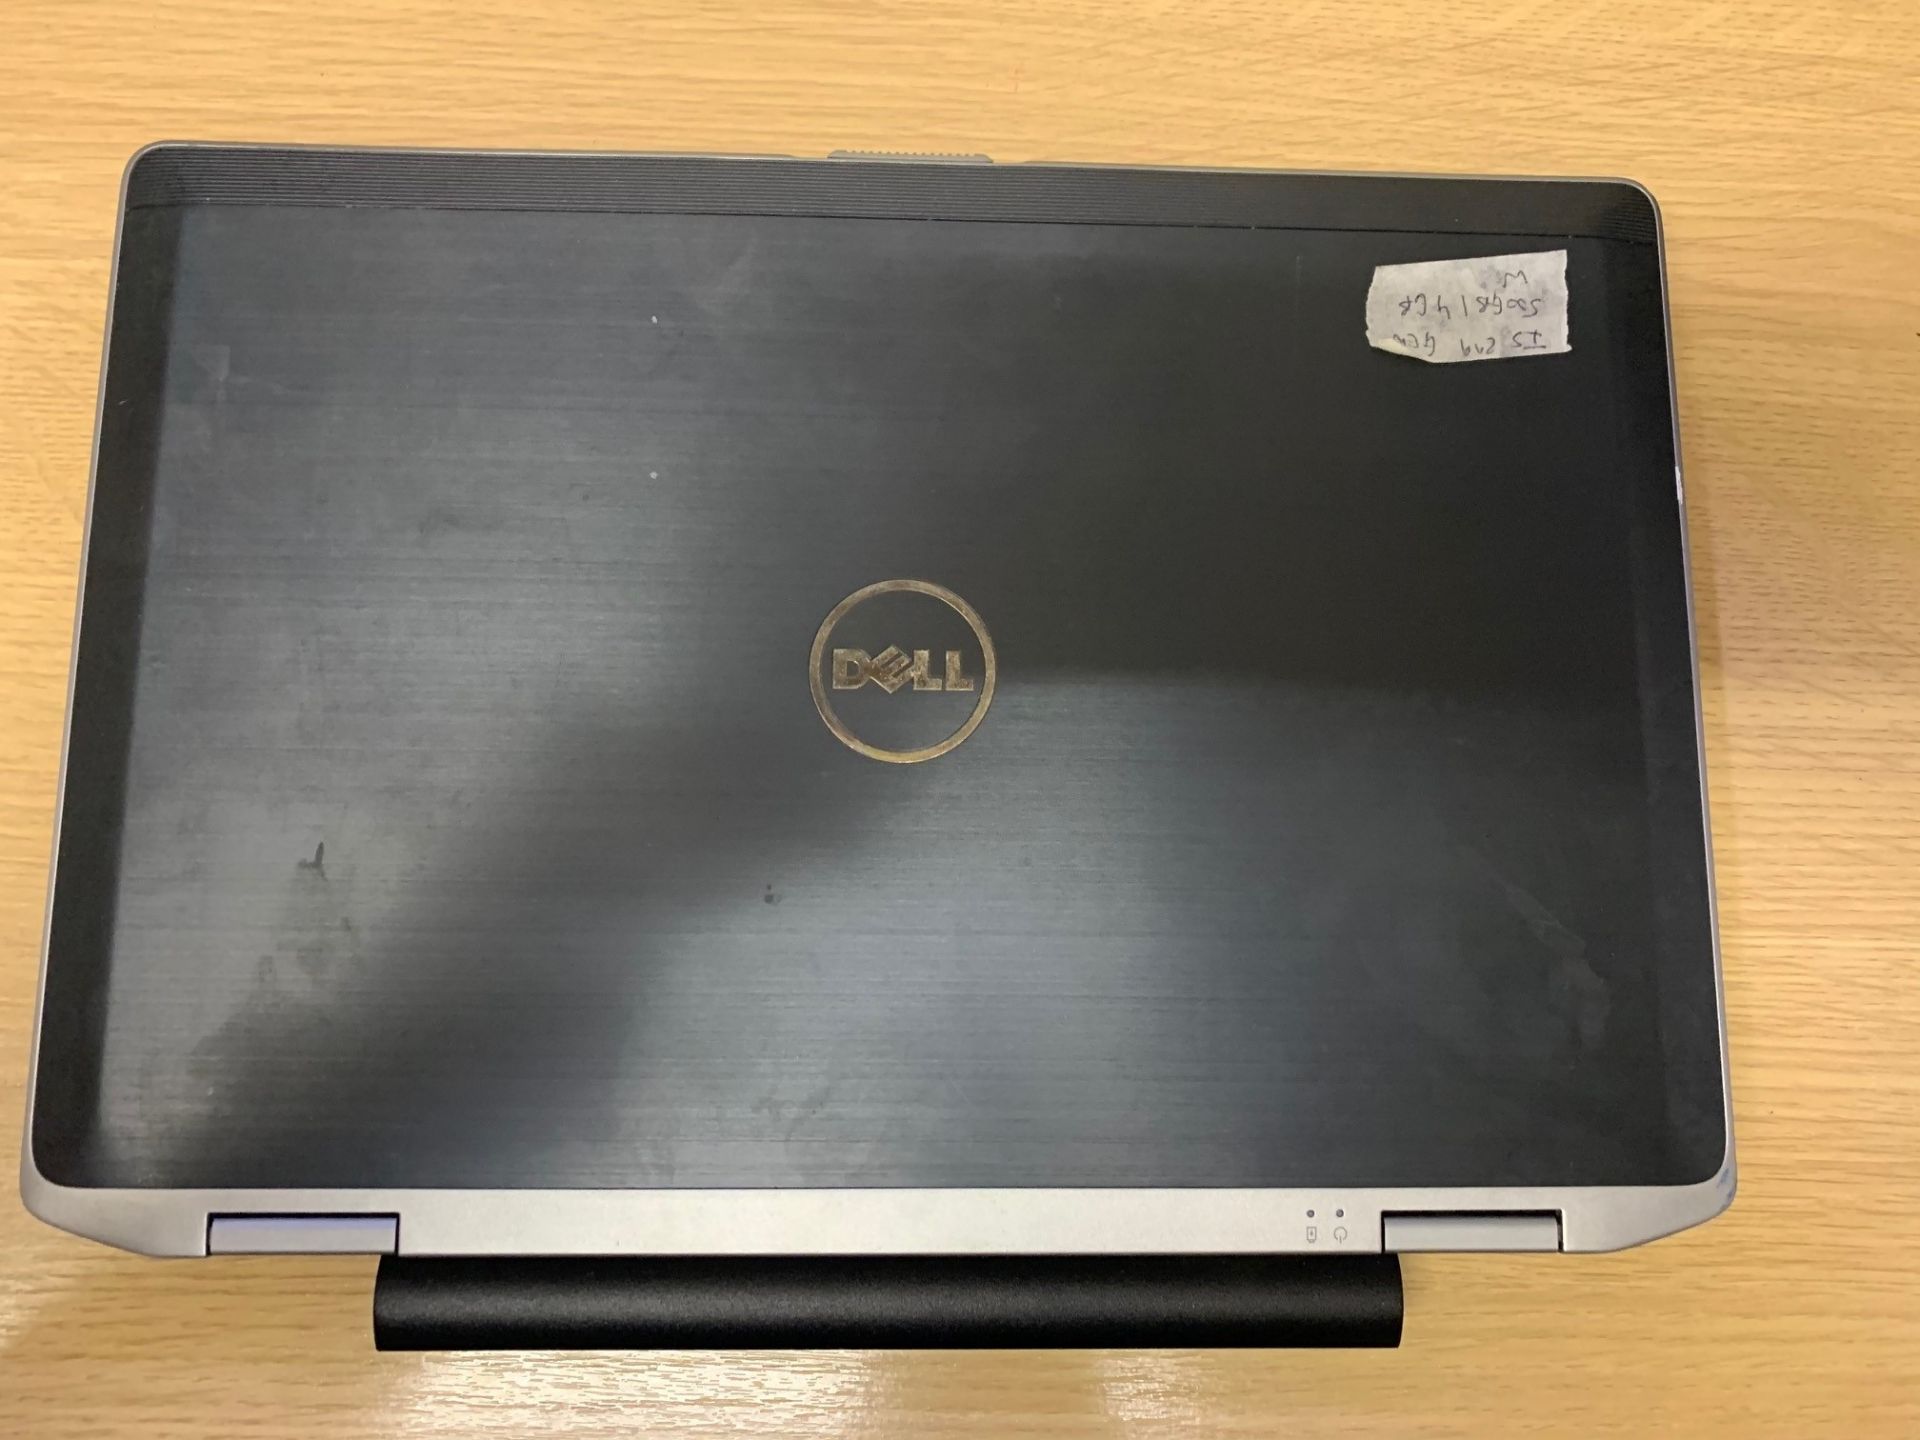 Dell Lattitude E6420 Laptop - i5 2nd Generation, 500GB Hard Drive, 4GB RAM, Windows 10 & Charger - Image 2 of 3